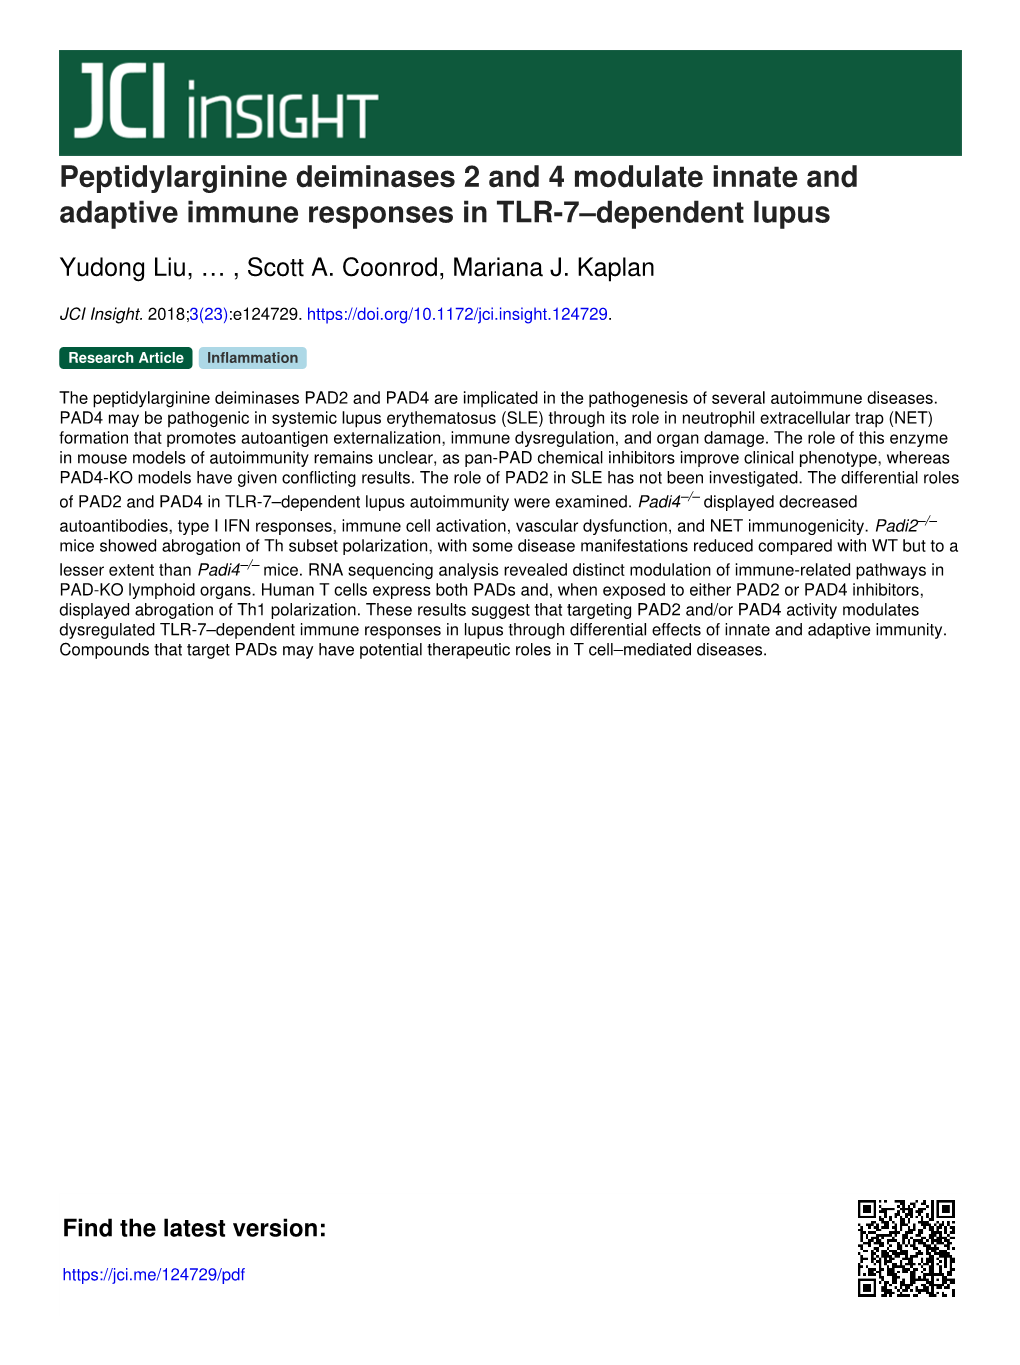 Peptidylarginine Deiminases 2 and 4 Modulate Innate and Adaptive Immune Responses in TLR-7–Dependent Lupus